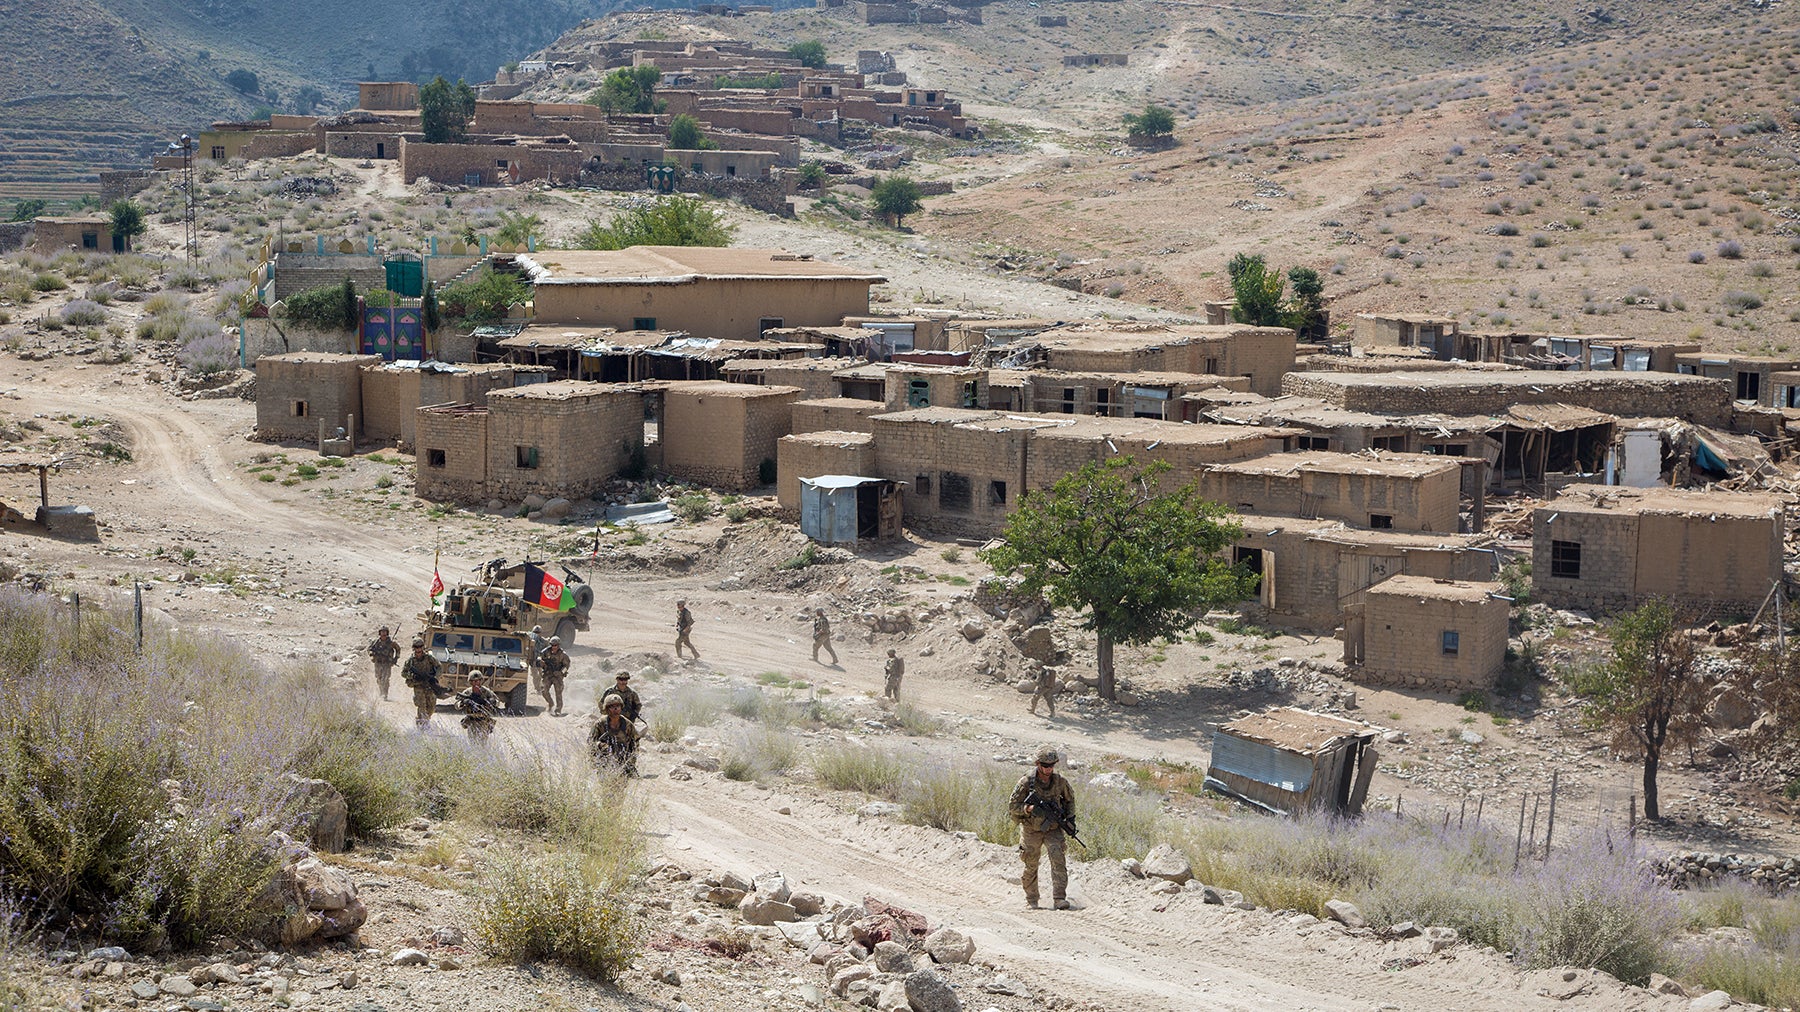 Paratroopers in Afghanistan